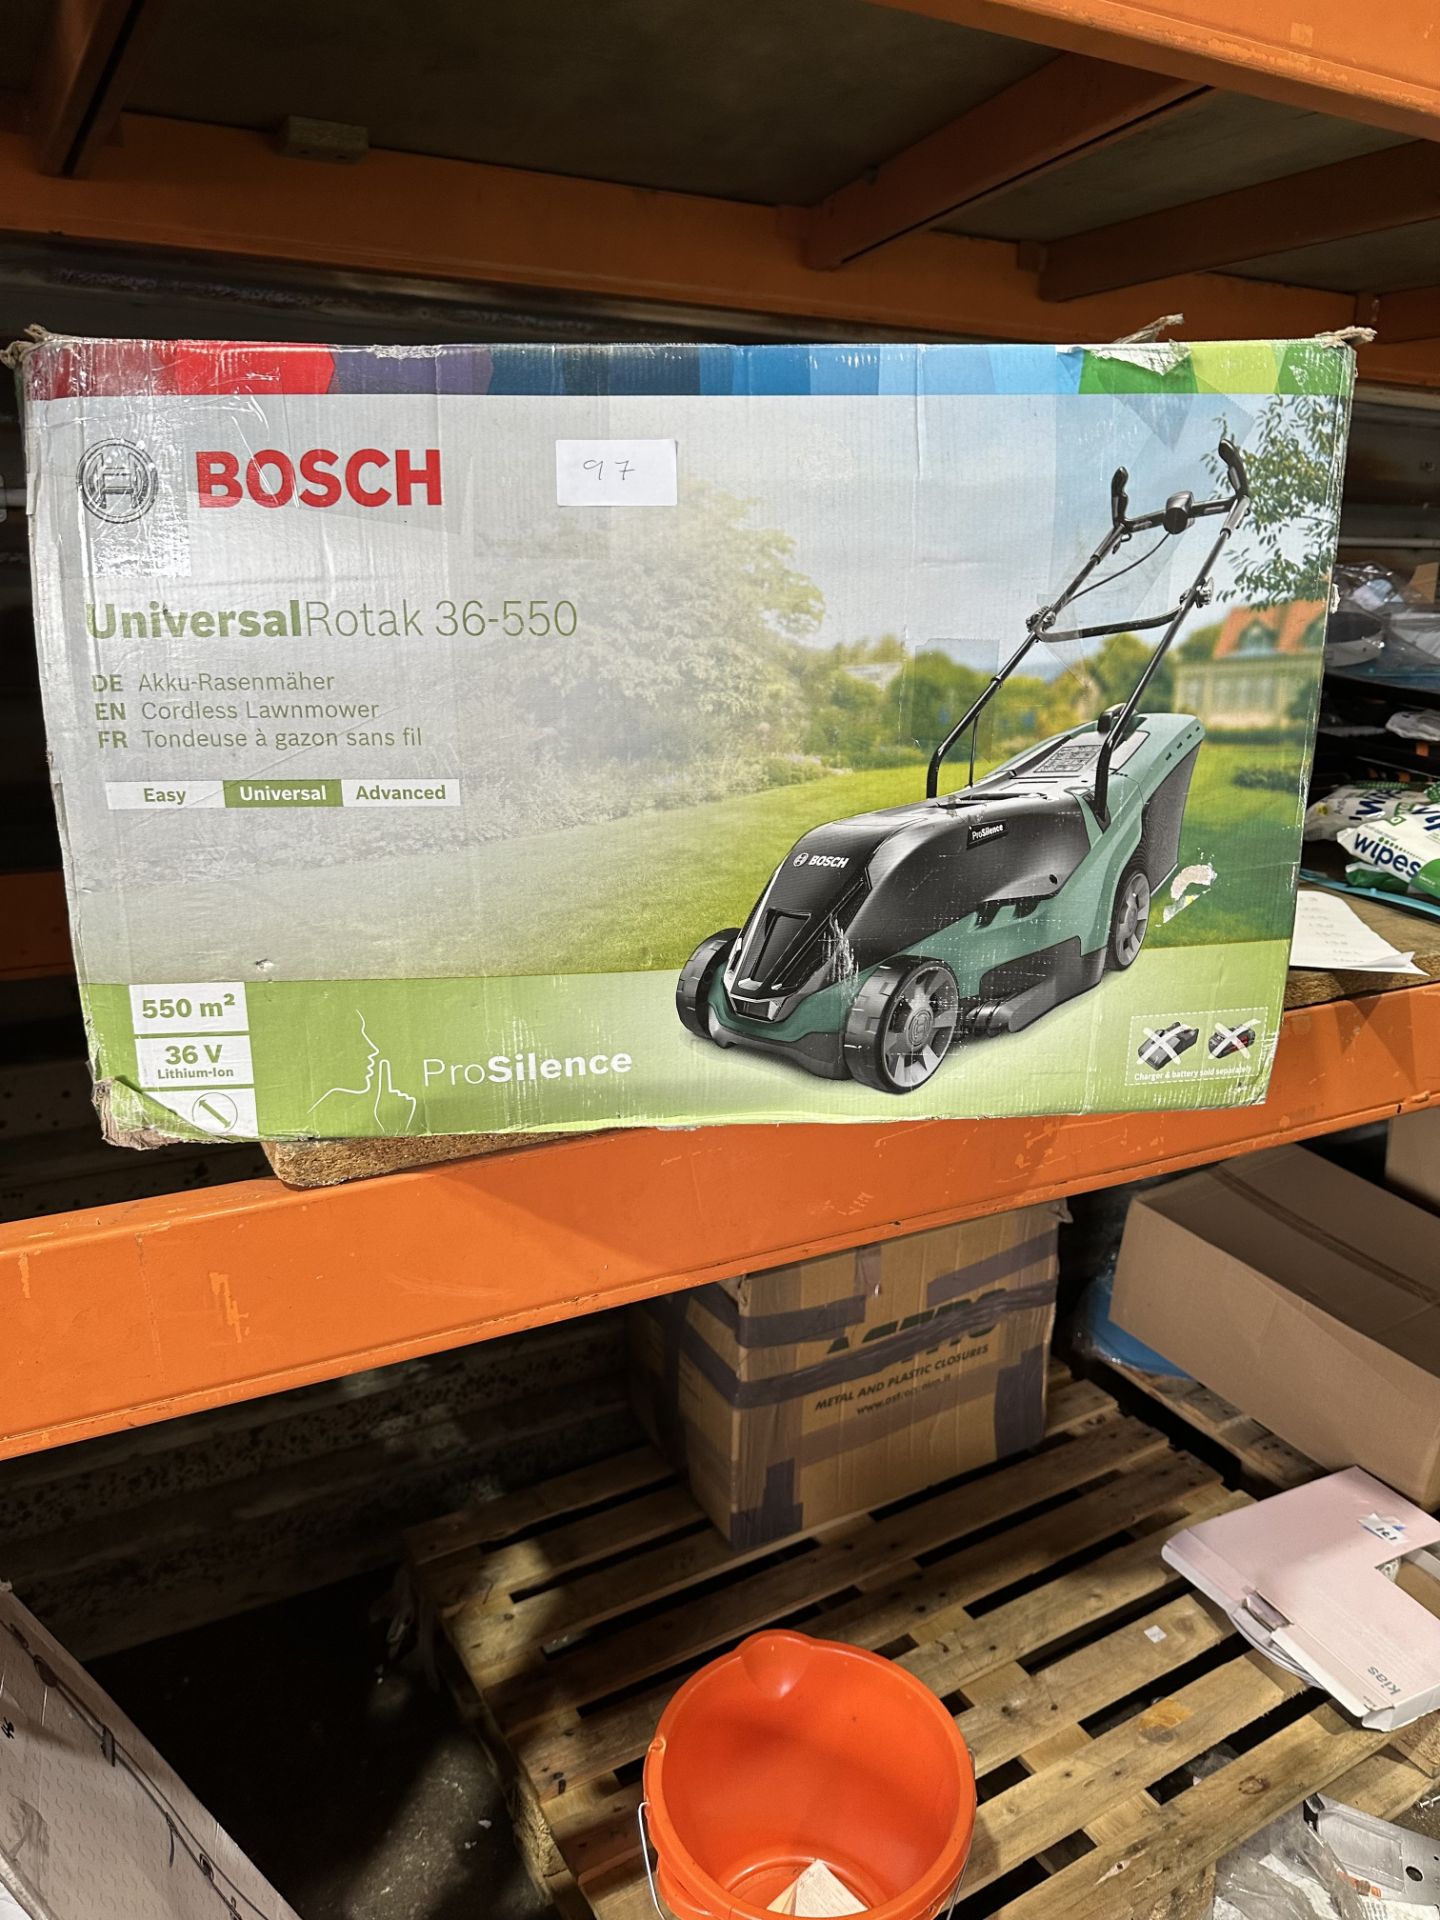 Bosch Universal Rotak 36-550 Lawnmower. RRP £150. Grade U